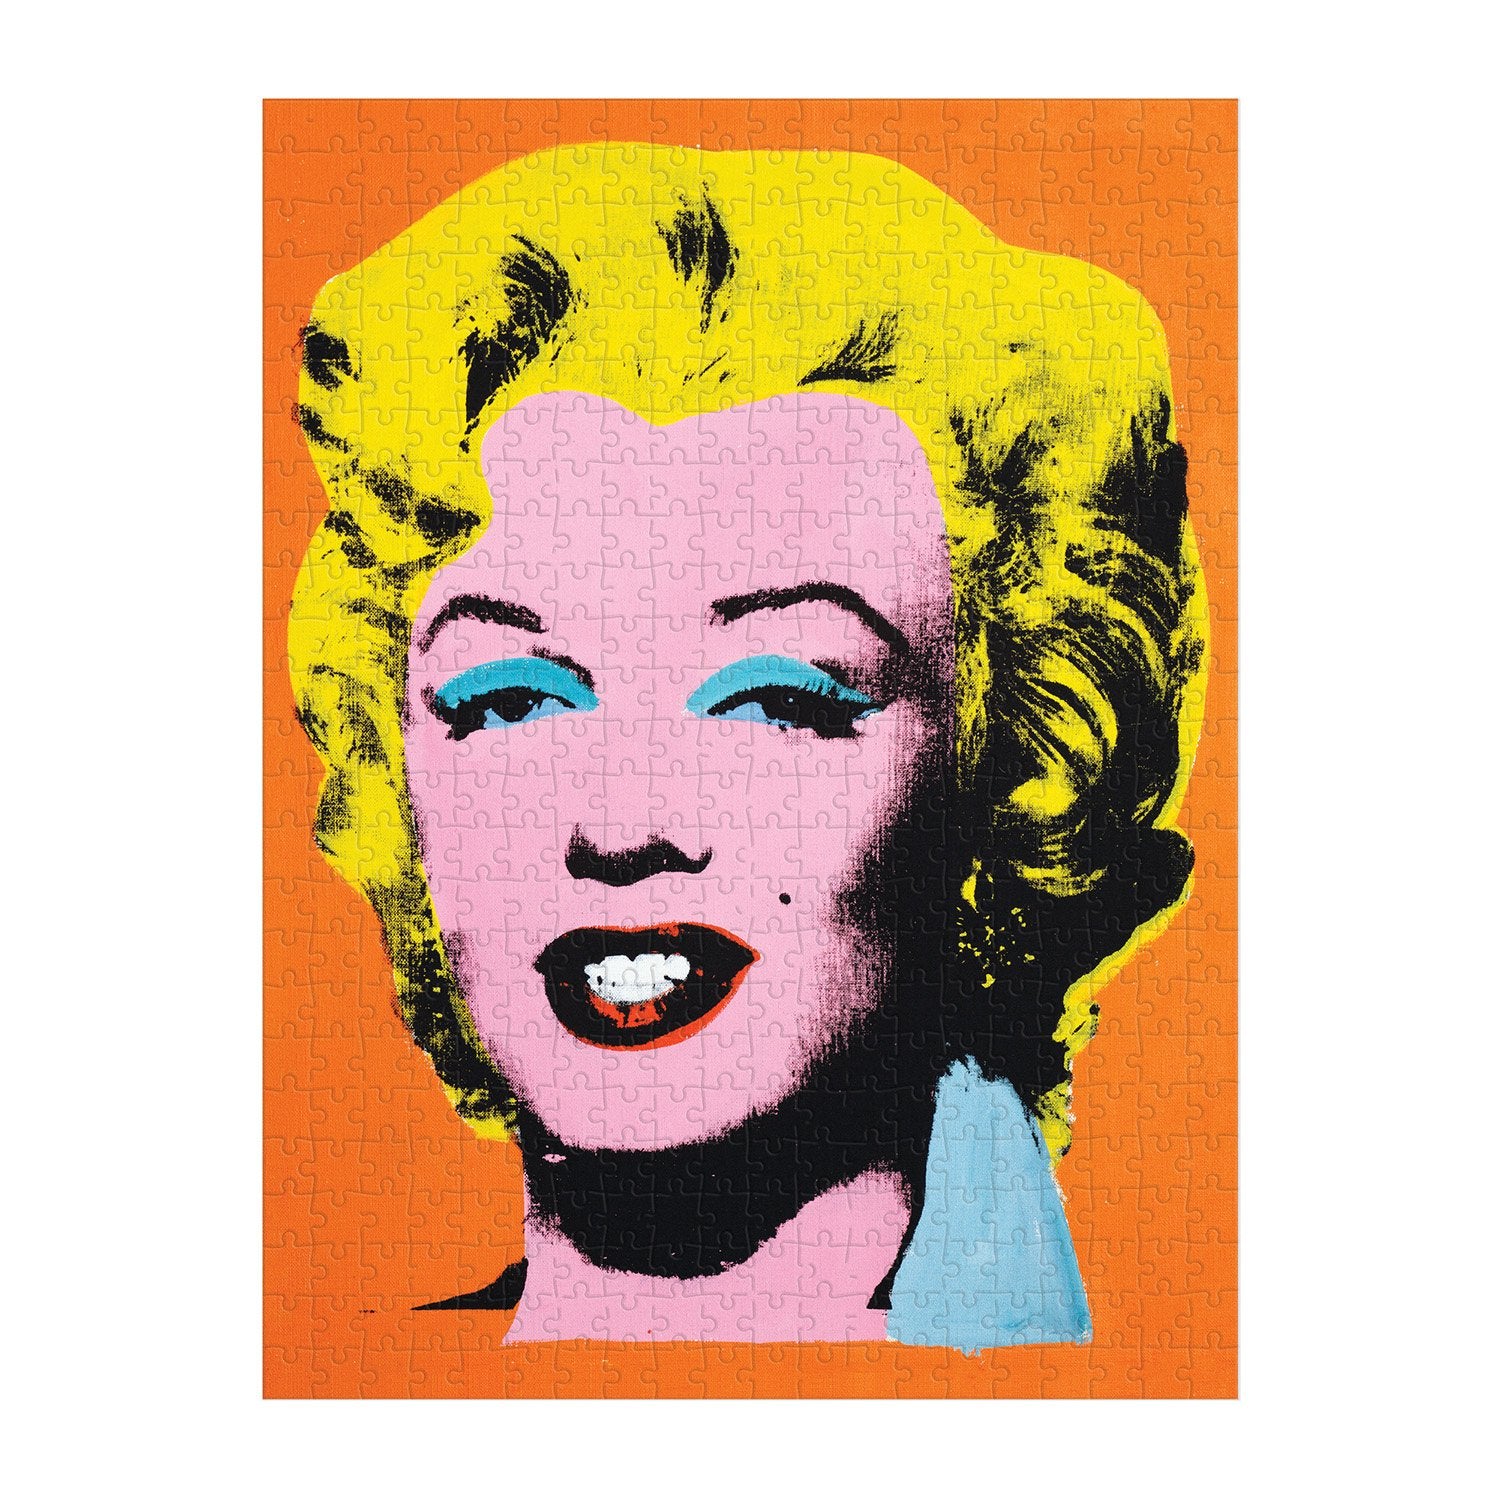 Warhol Marilyn Double-Sided 500 Piece Jigsaw Puzzle